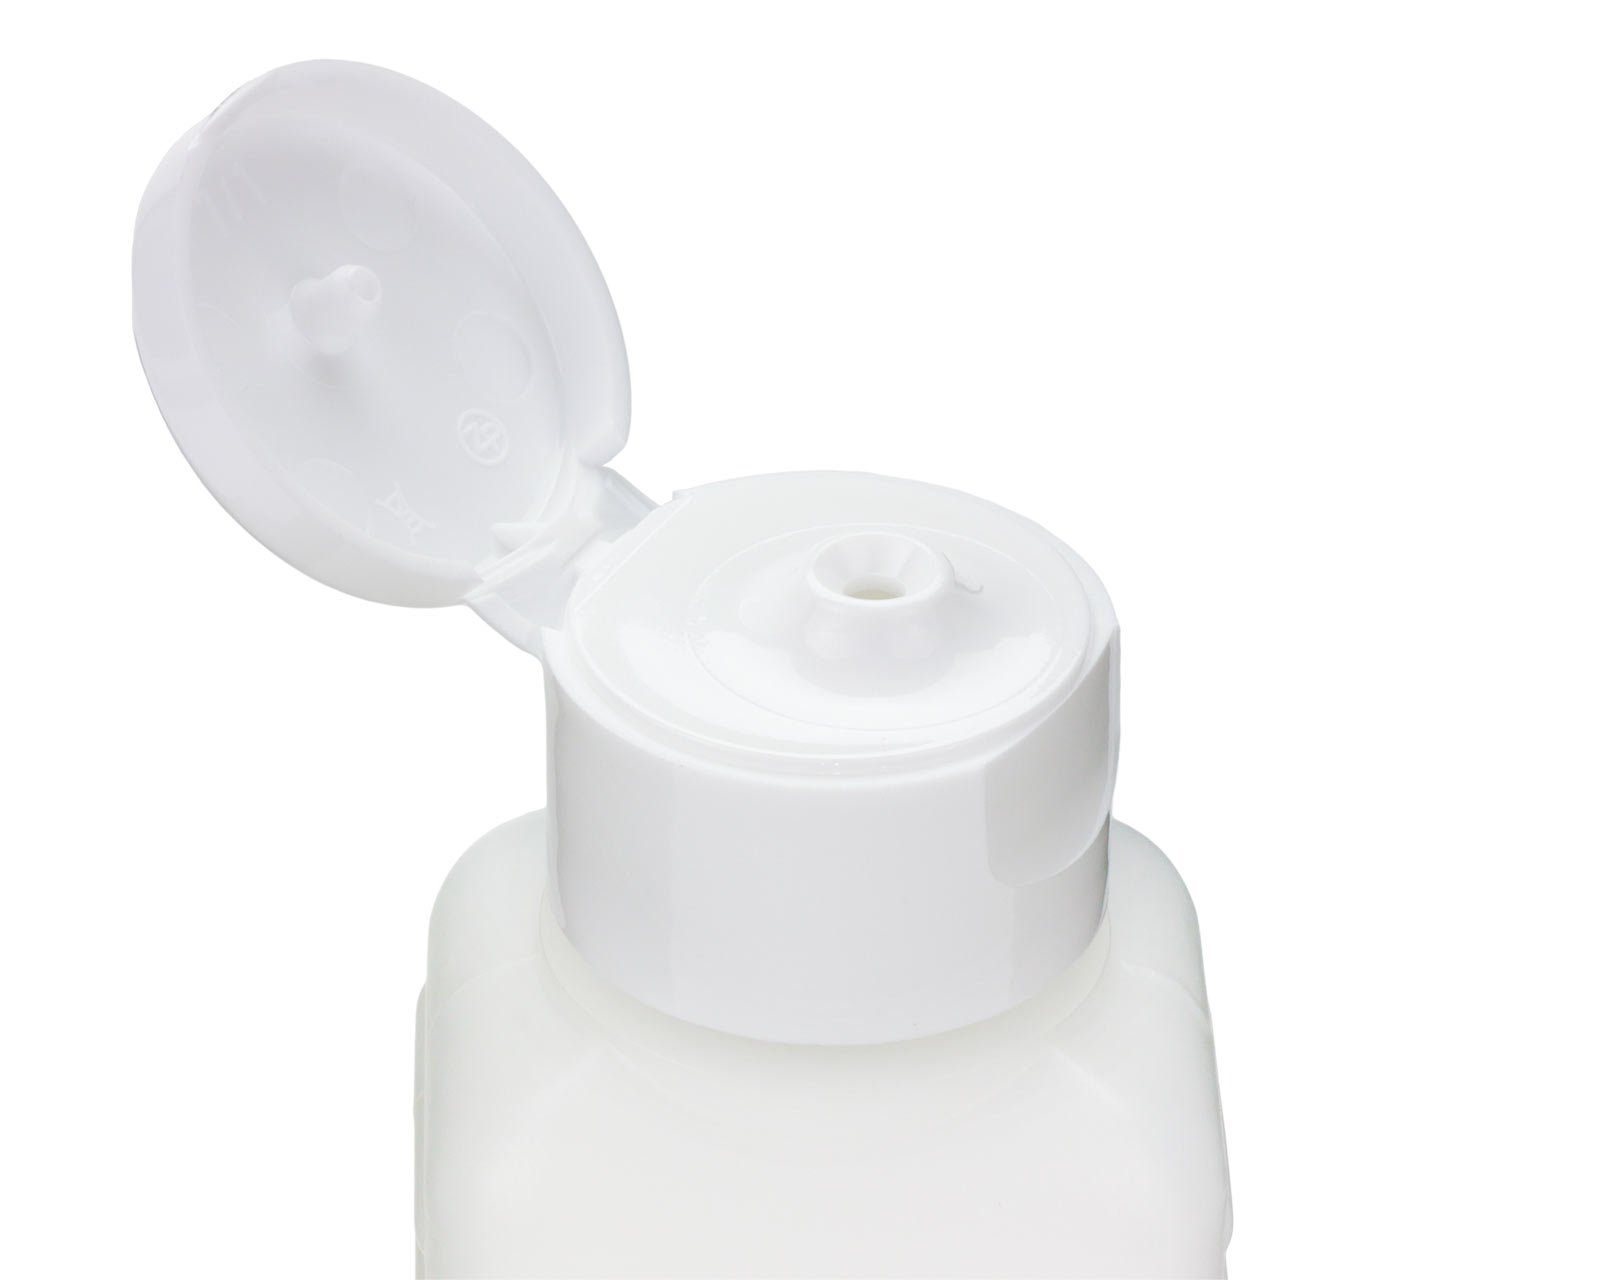 OCTOPUS Kanister 5 Plastikflaschen 50 HDPE, (5 eckig ml aus G25, St) Klappscharniervers natur